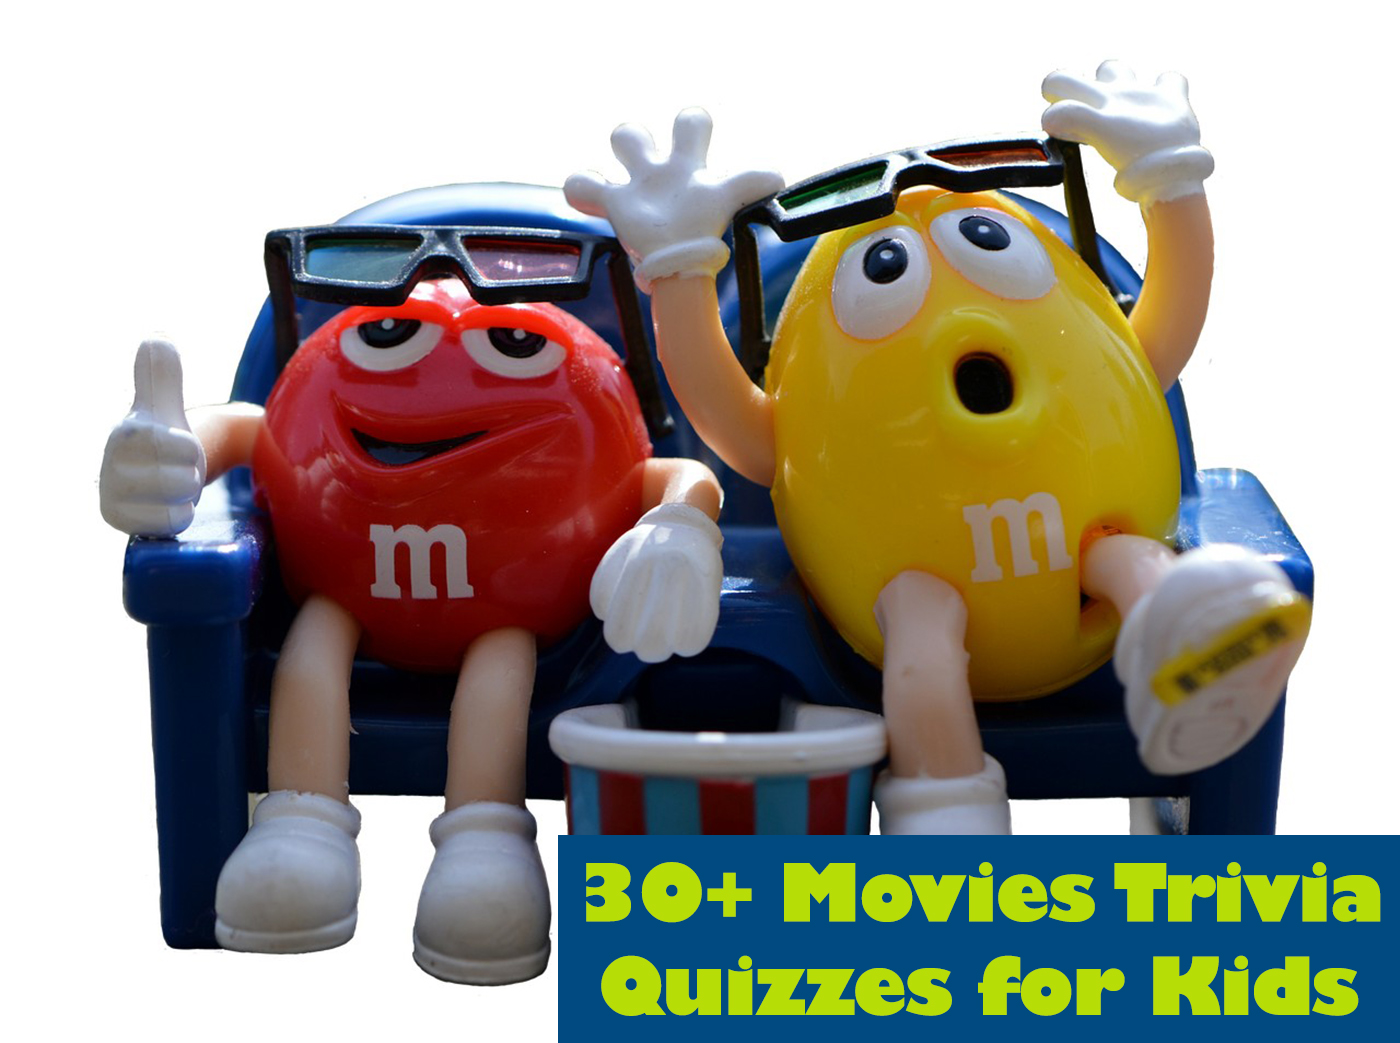 Movies Trivia Quizzes